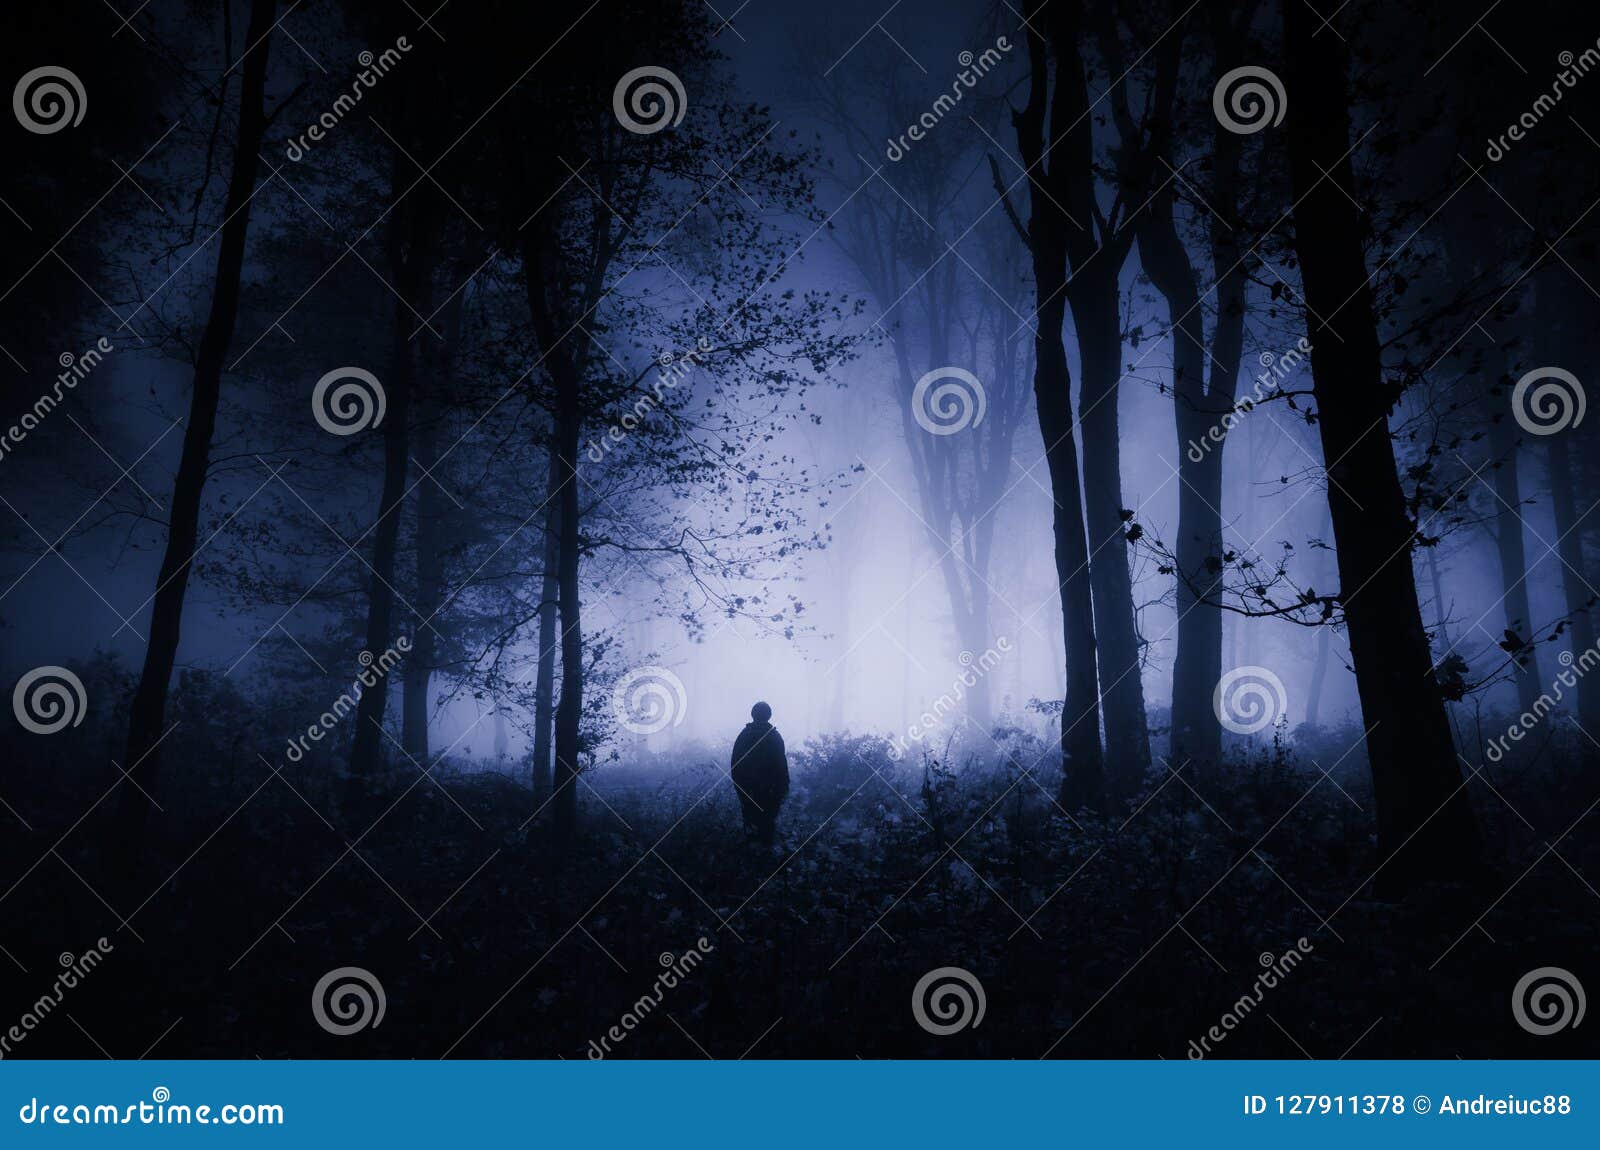 man in dark haunted woods